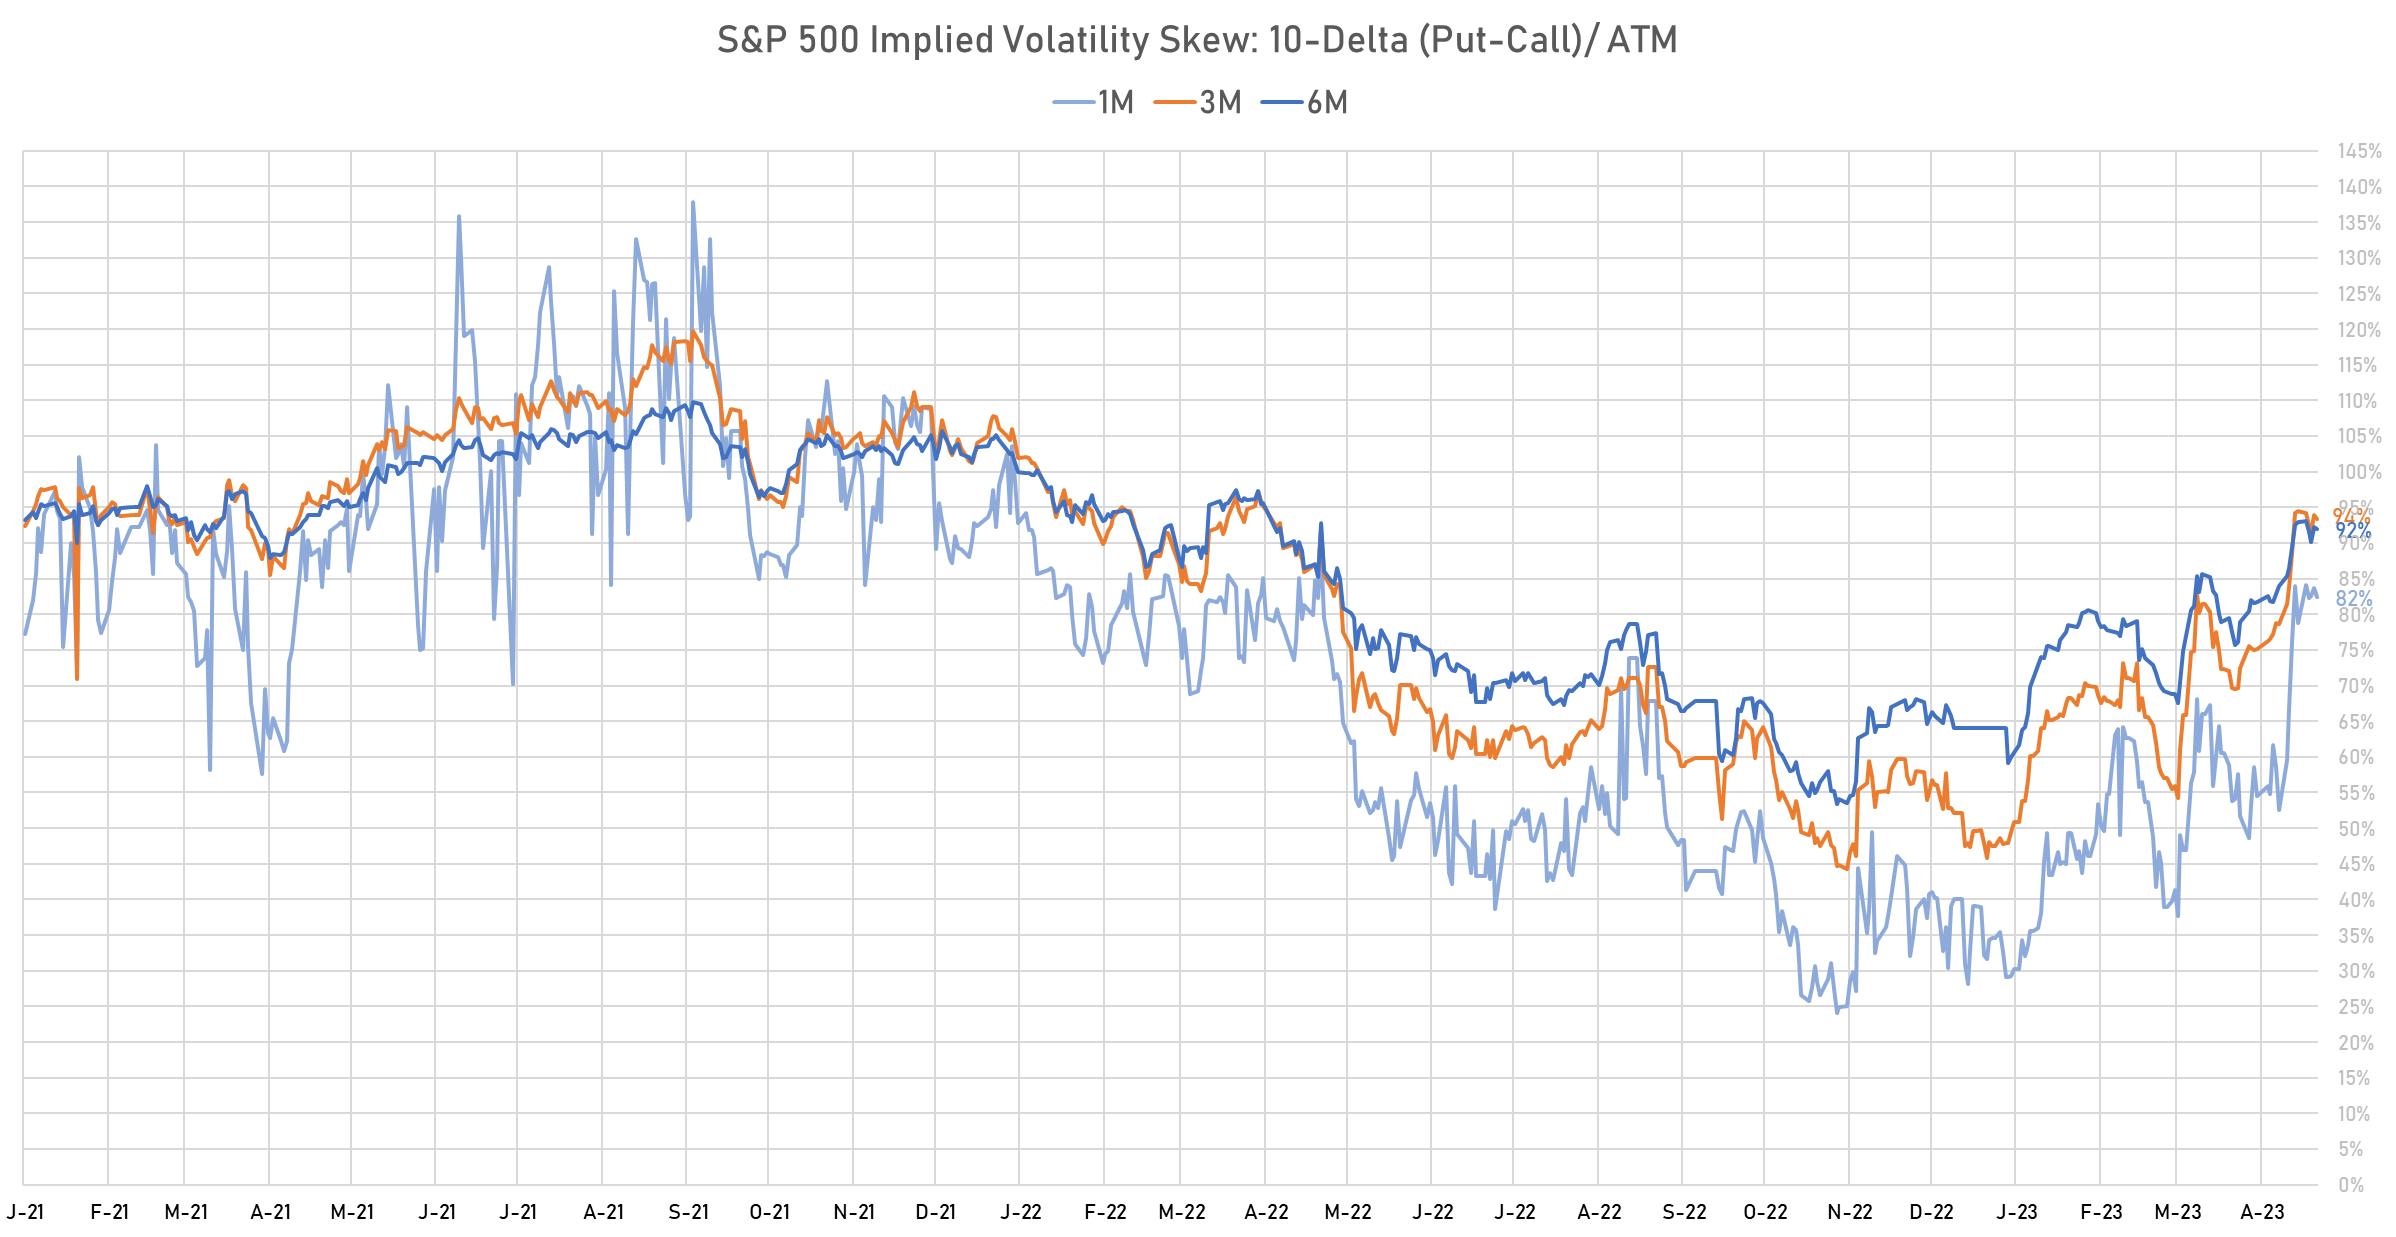 S&P 500 Implied Volatility Skew | Sources: phipost.com, Refinitiv data